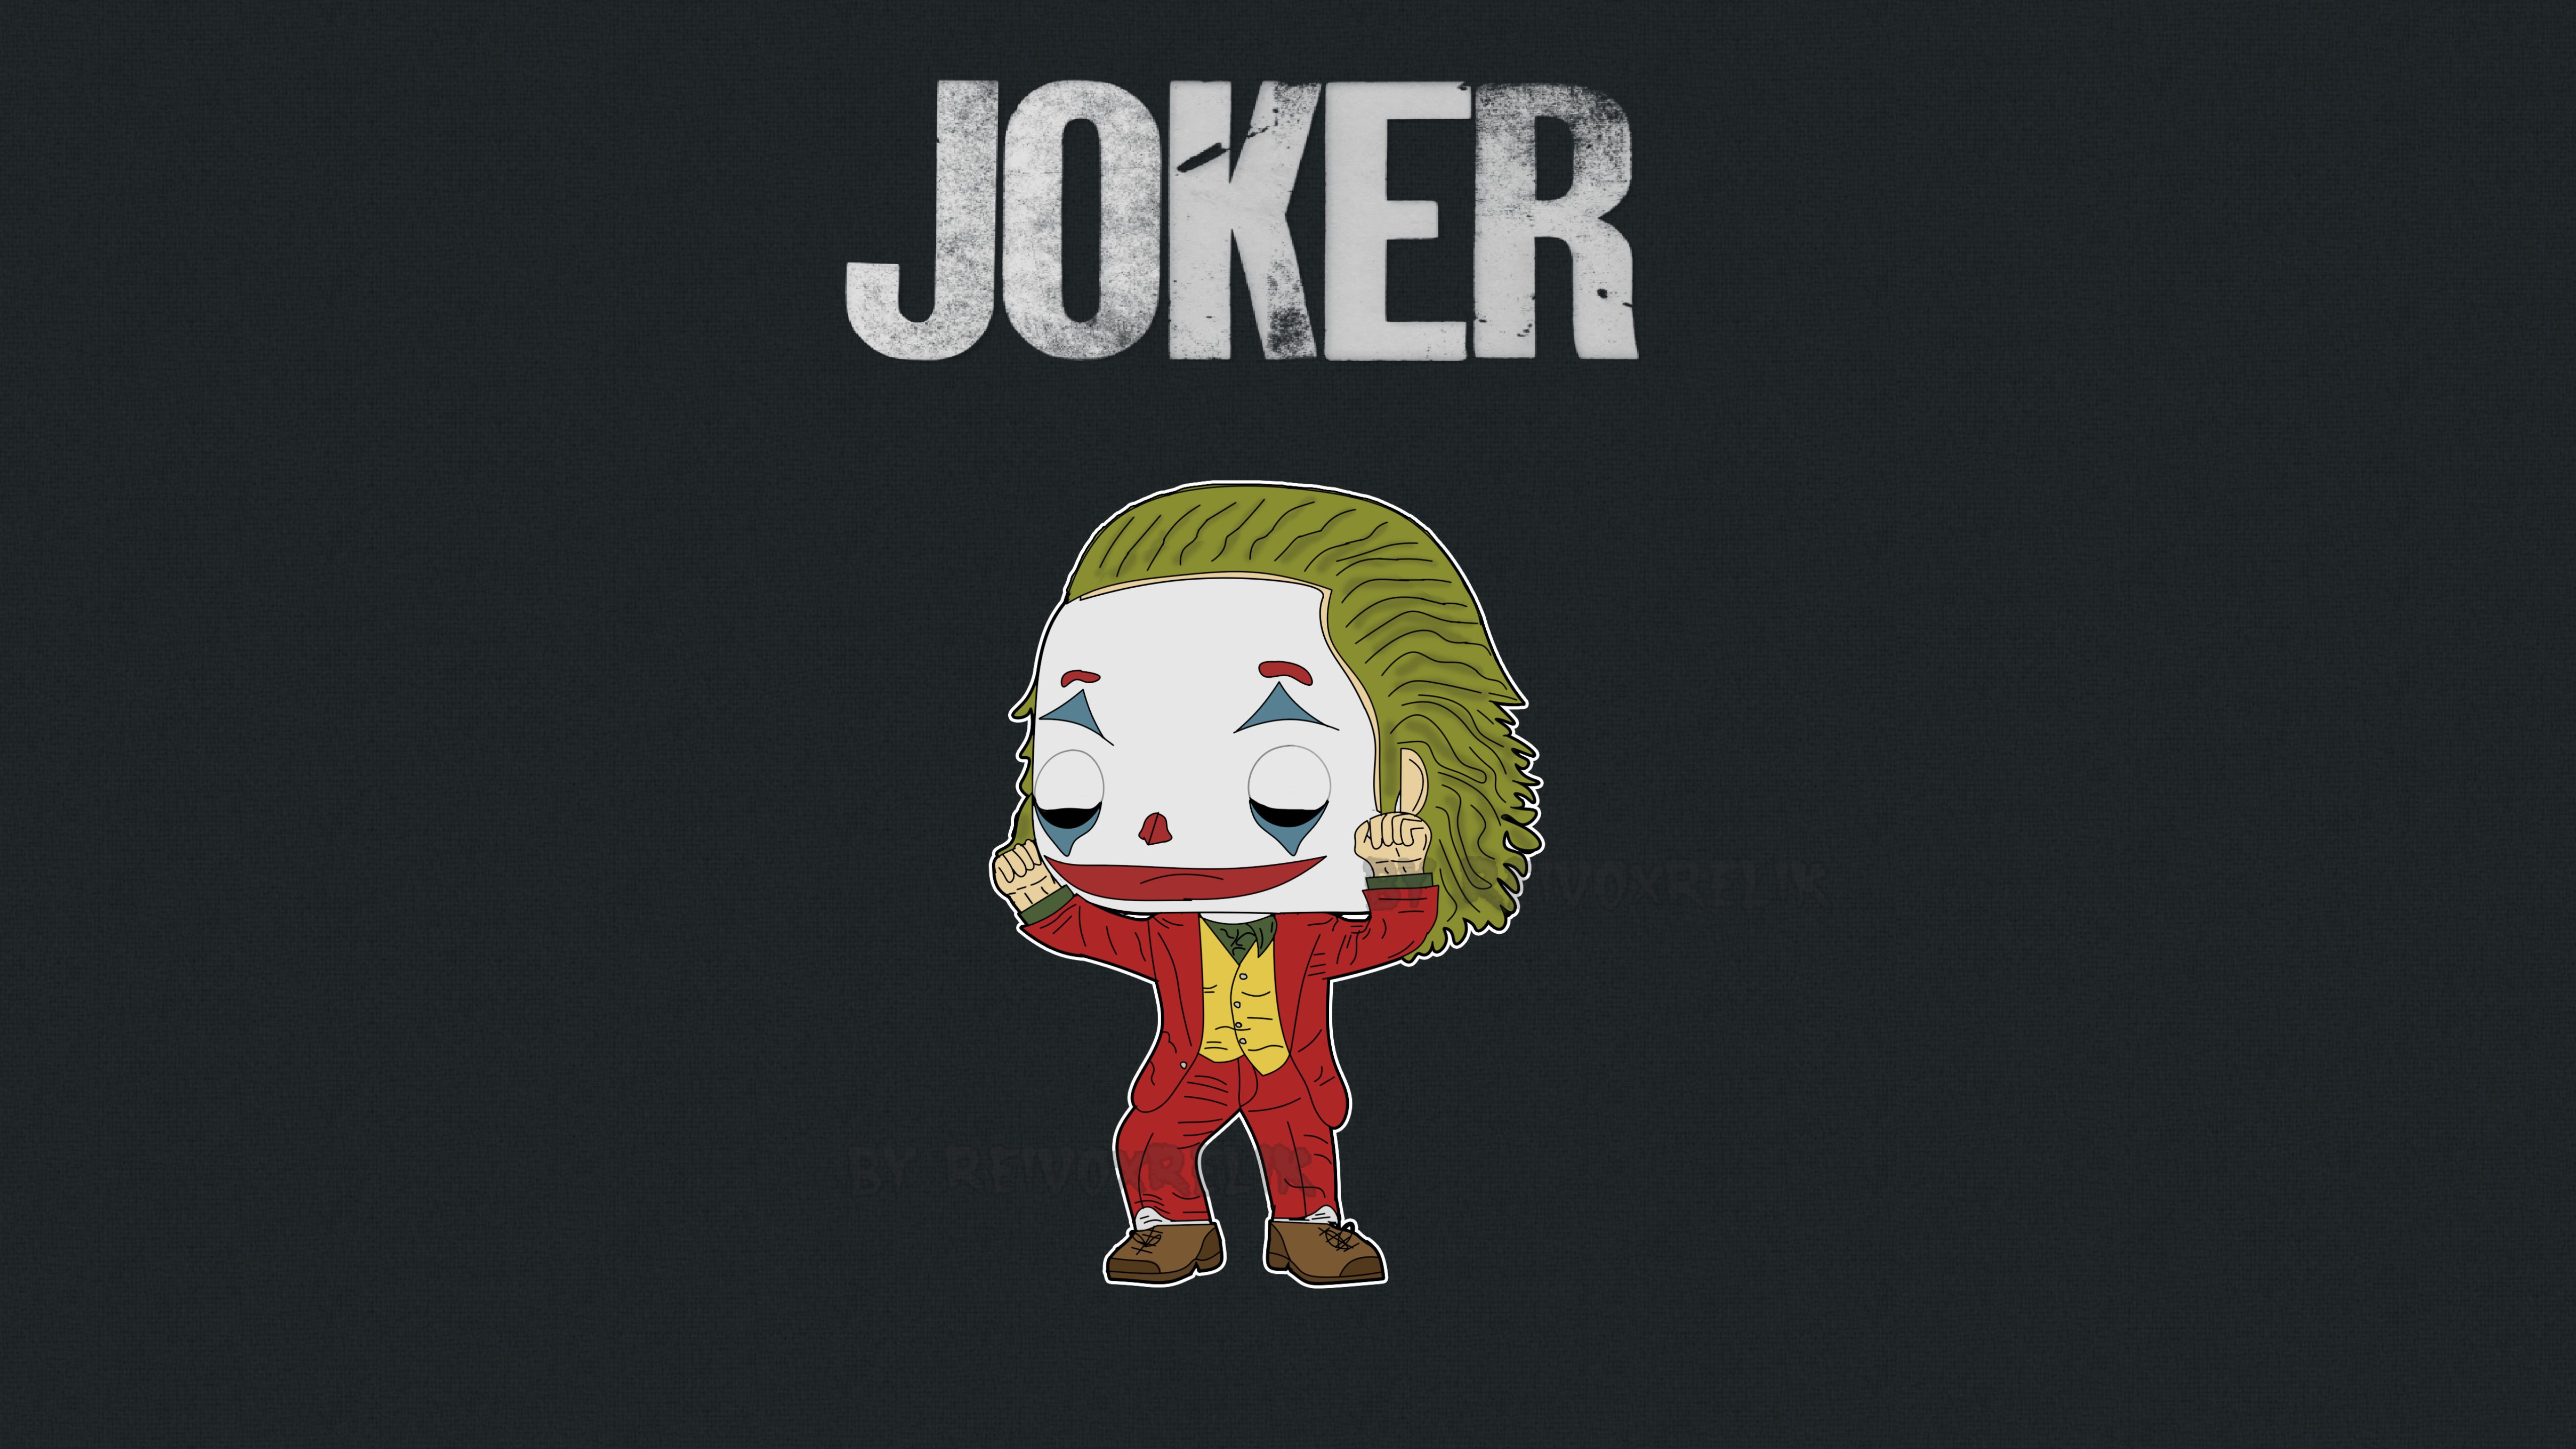 Joker Cartoon Art 5K Wallpaper, HD Superheroes 4K Wallpaper, Image, Photo and Background